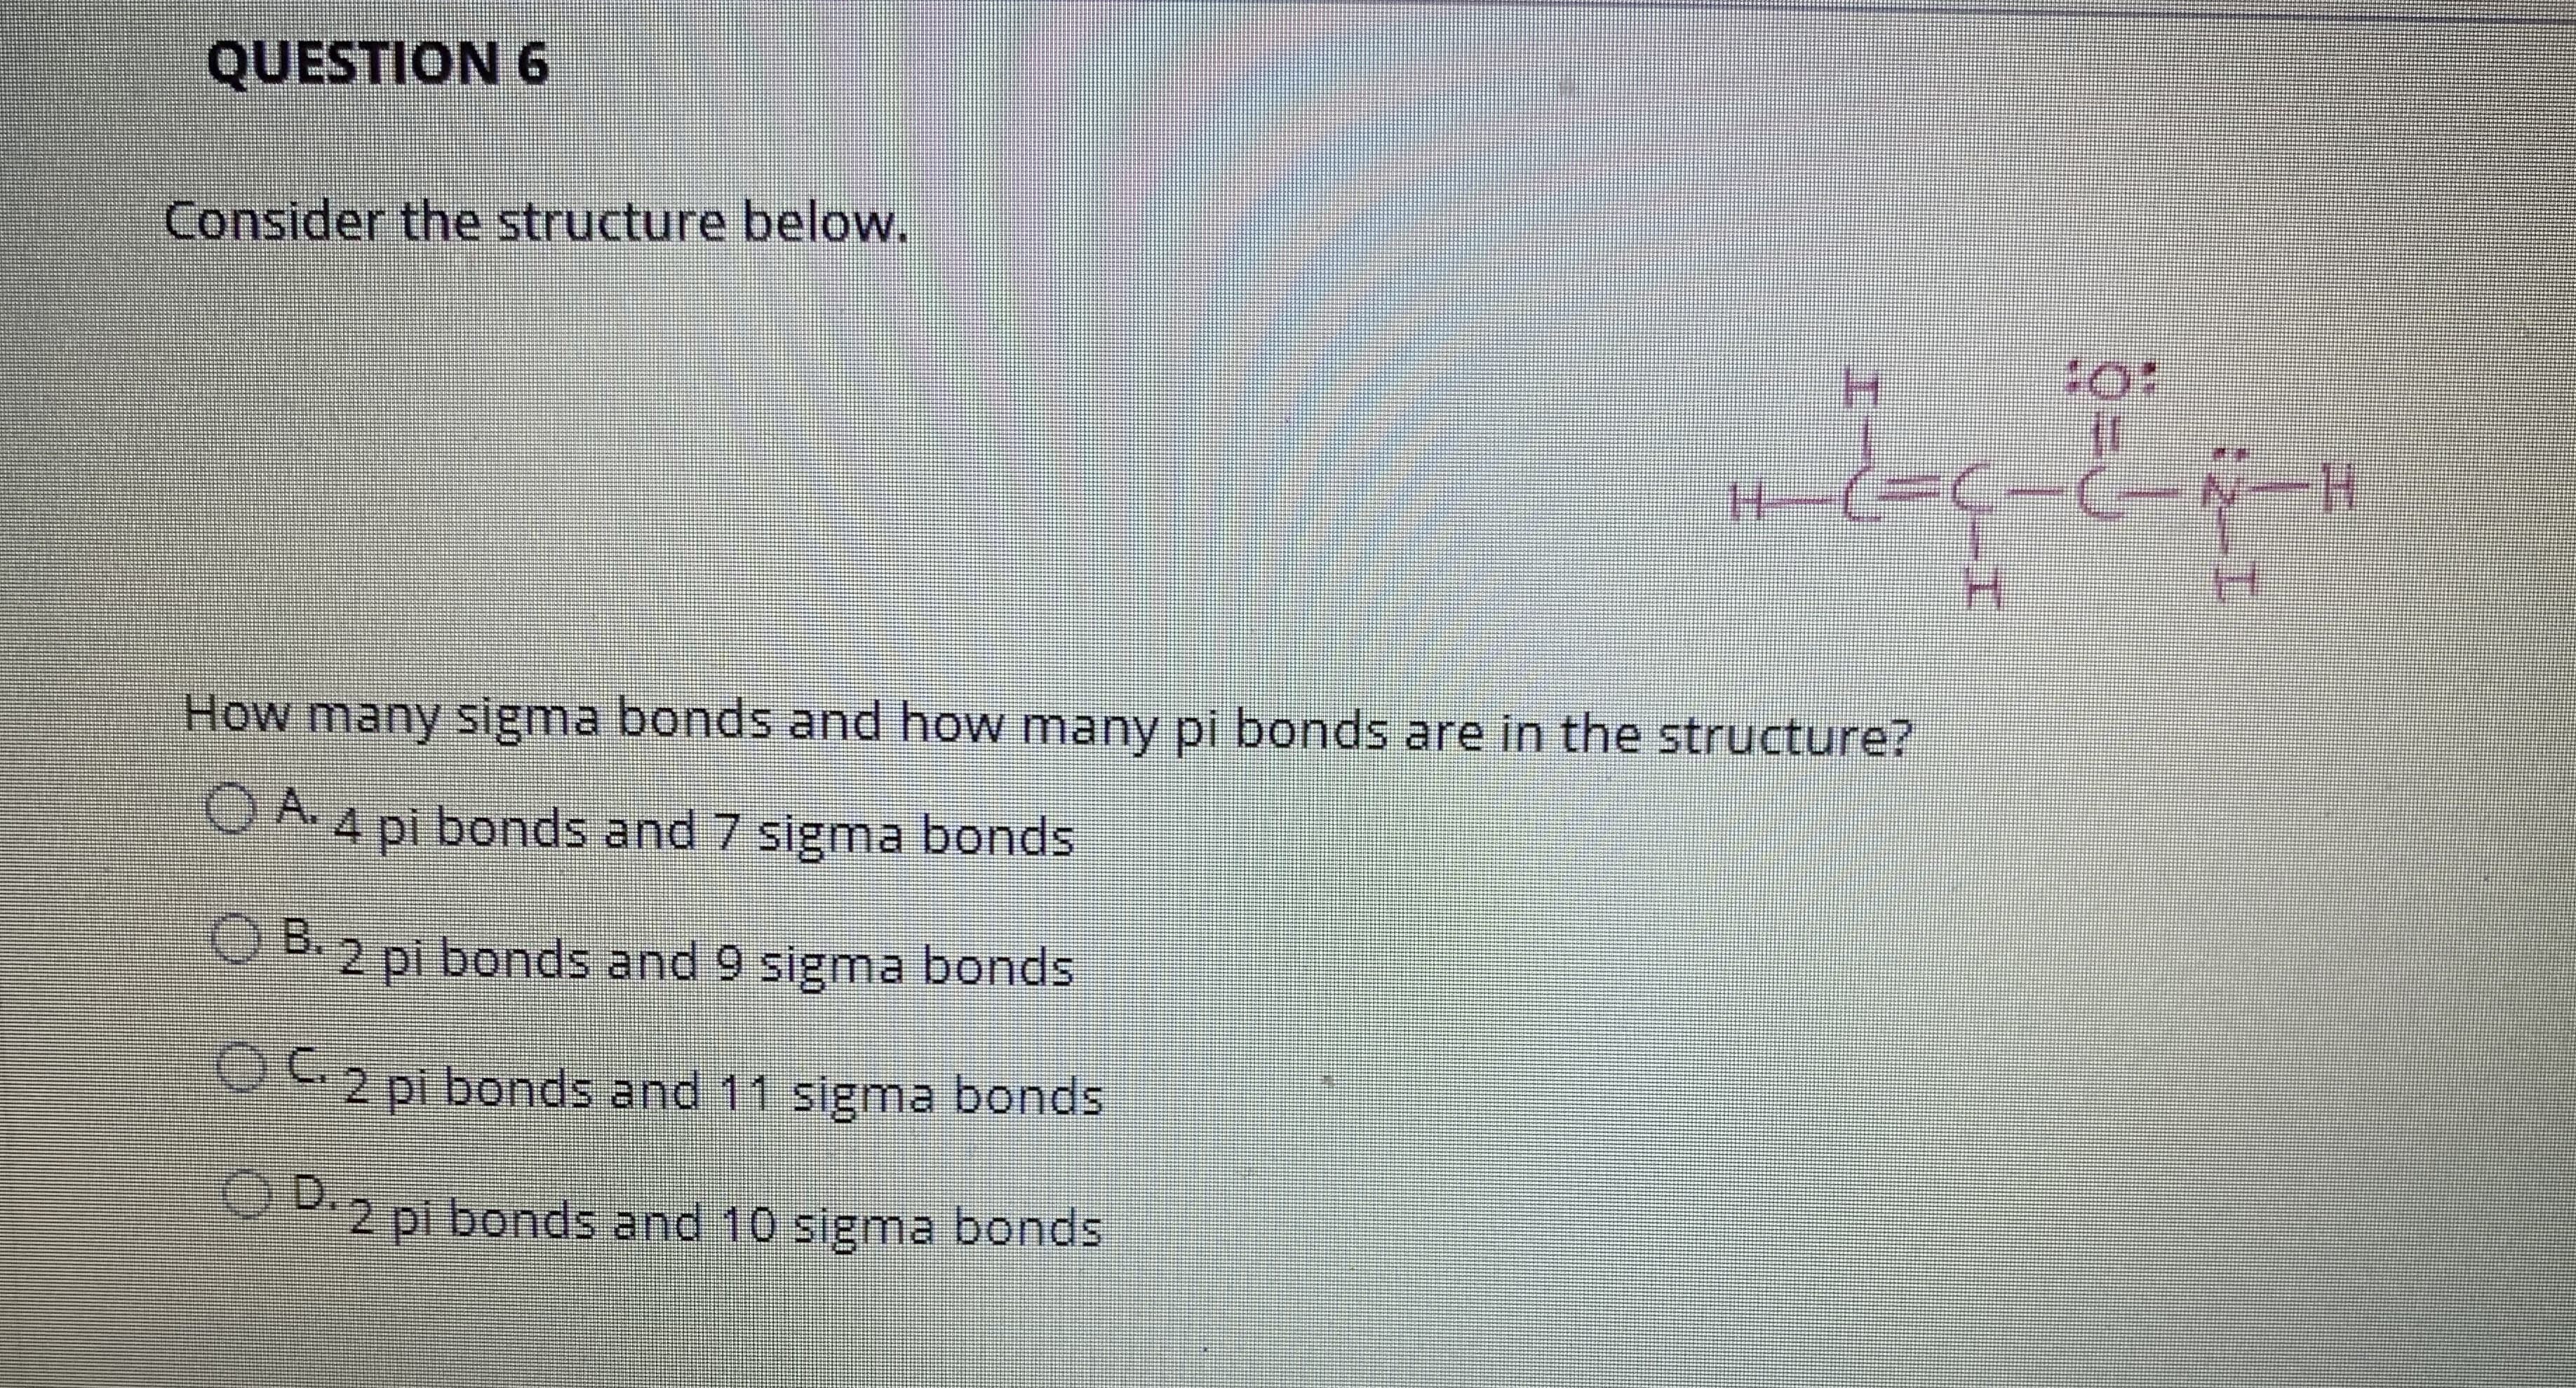 How many sigma bonds and how many pi bonds are in the structure?
O A. 4 pi bonds and 7 sigma bonds
OB. 2 pi bonds and 9 sigma bonds
